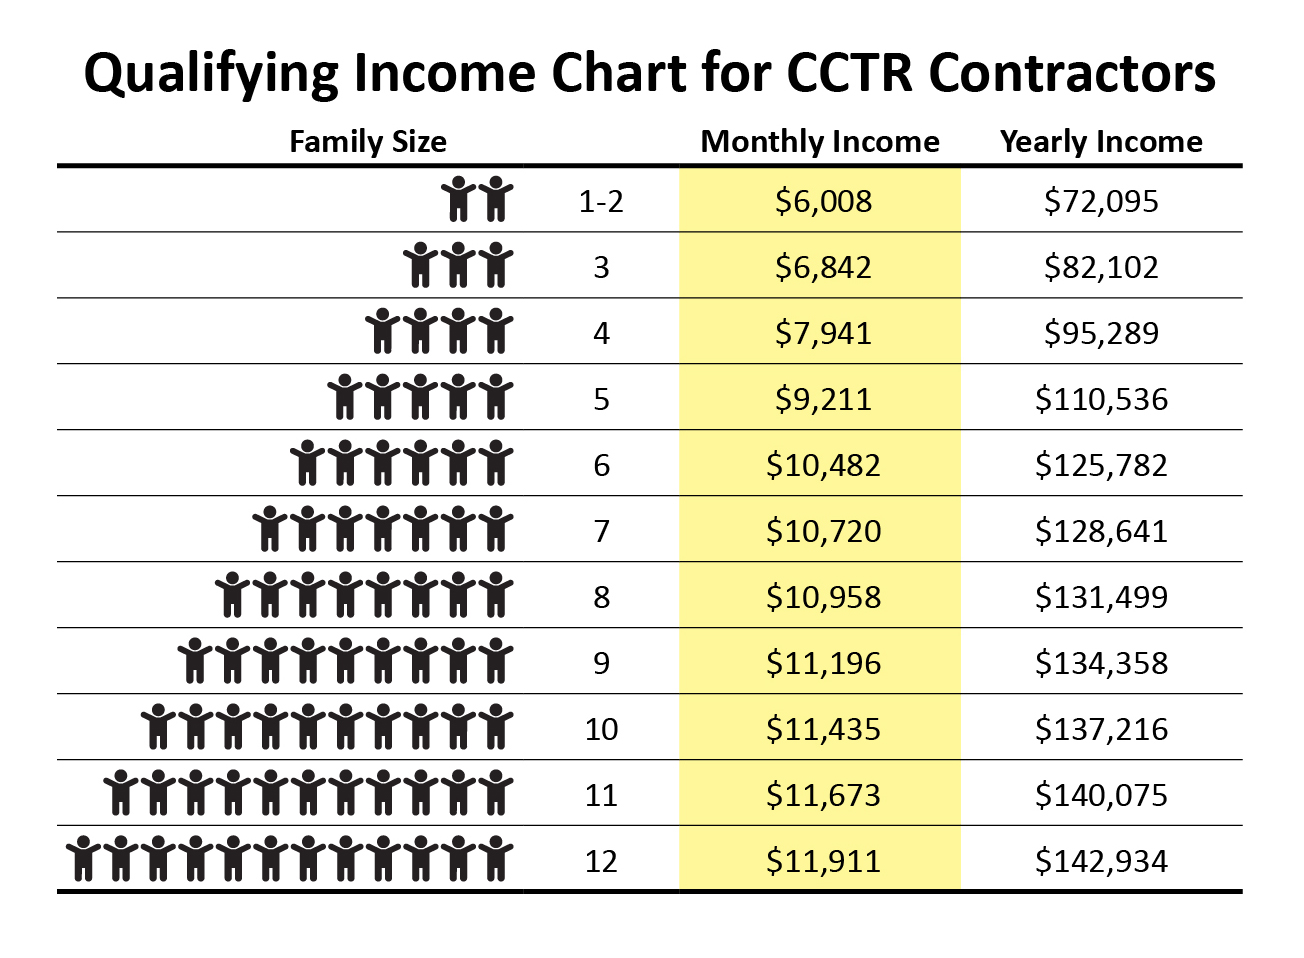 CCTR Qualifying Income Chart 01.23.2023.jpg